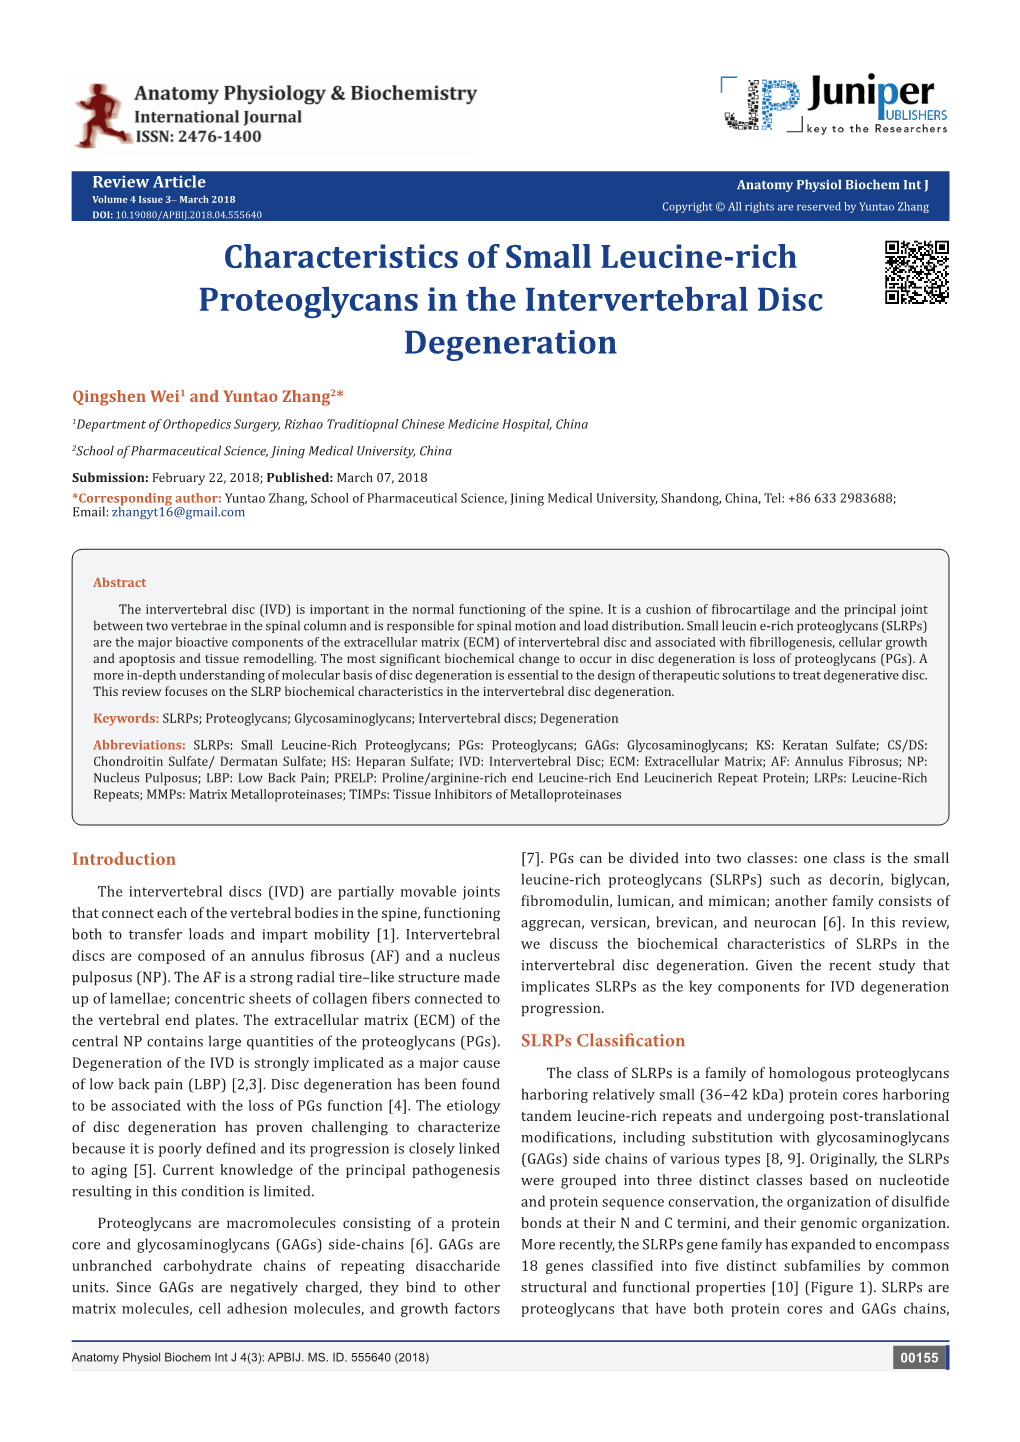 Characteristics of Small Leucine-Rich Proteoglycans in the Intervertebral Disc Degeneration